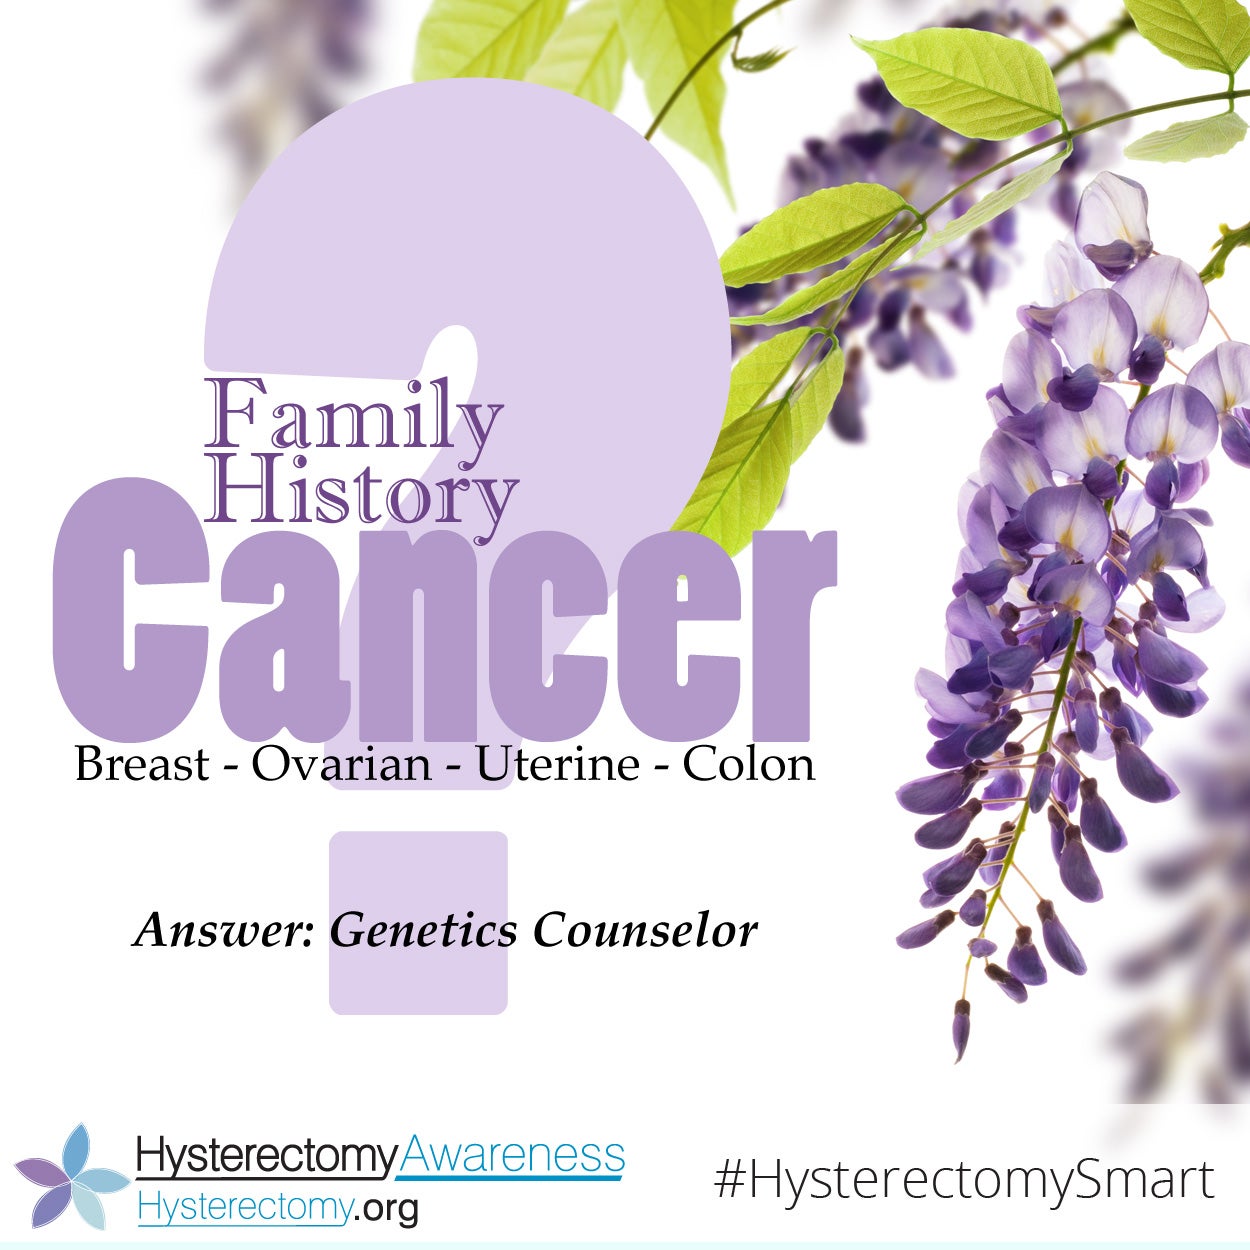 Family History Breast, Ovarian, Uterine Cancers #HysterectomySmart